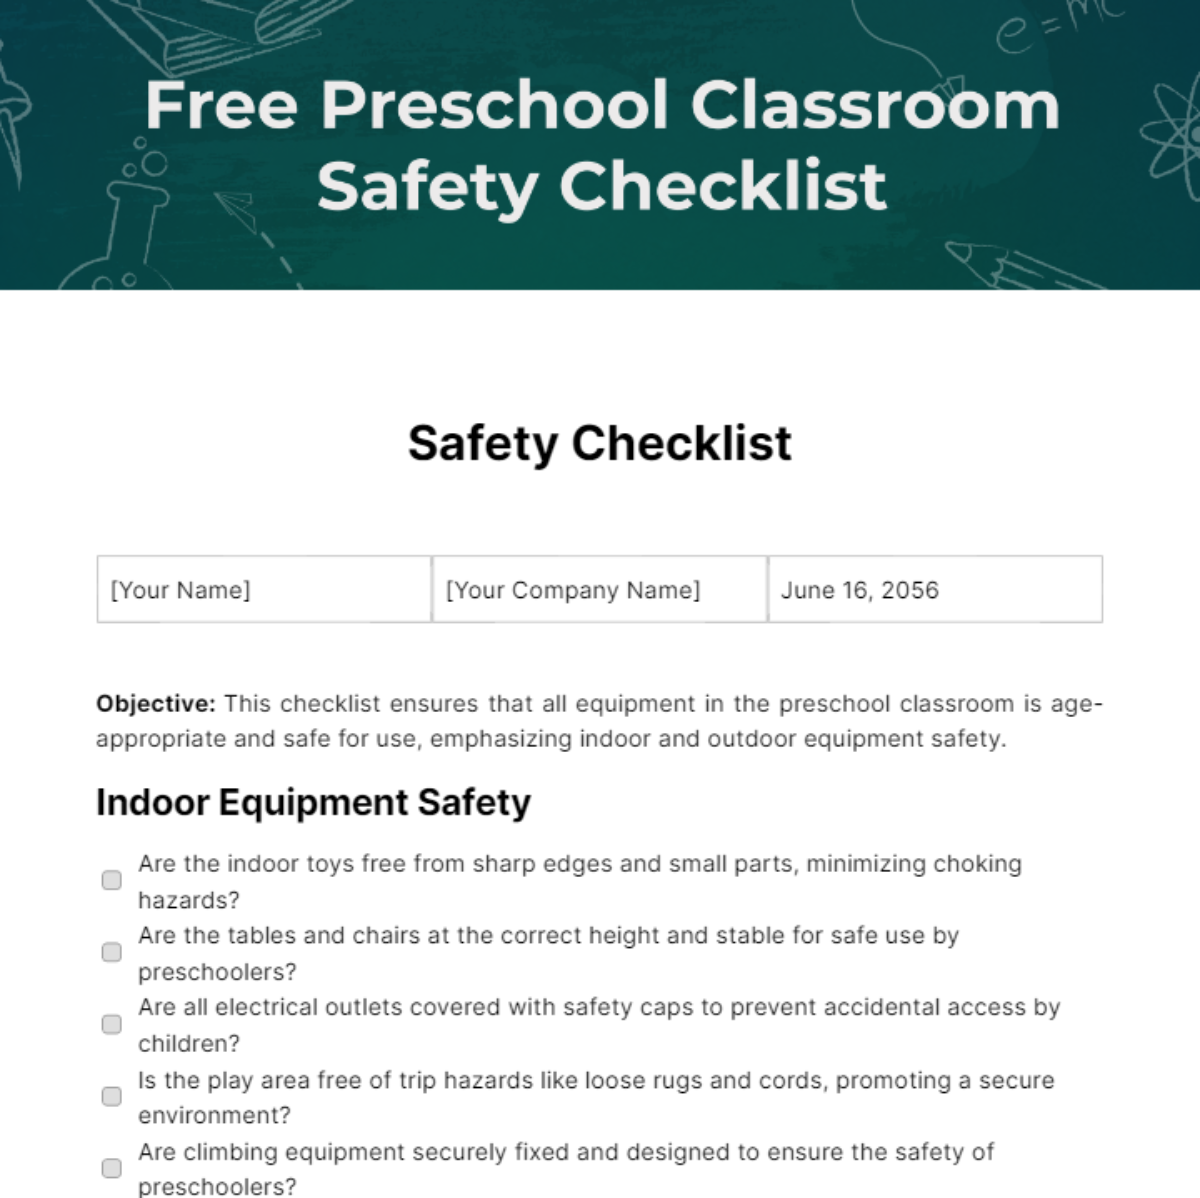 Free Preschool Classroom Safety Checklist Template